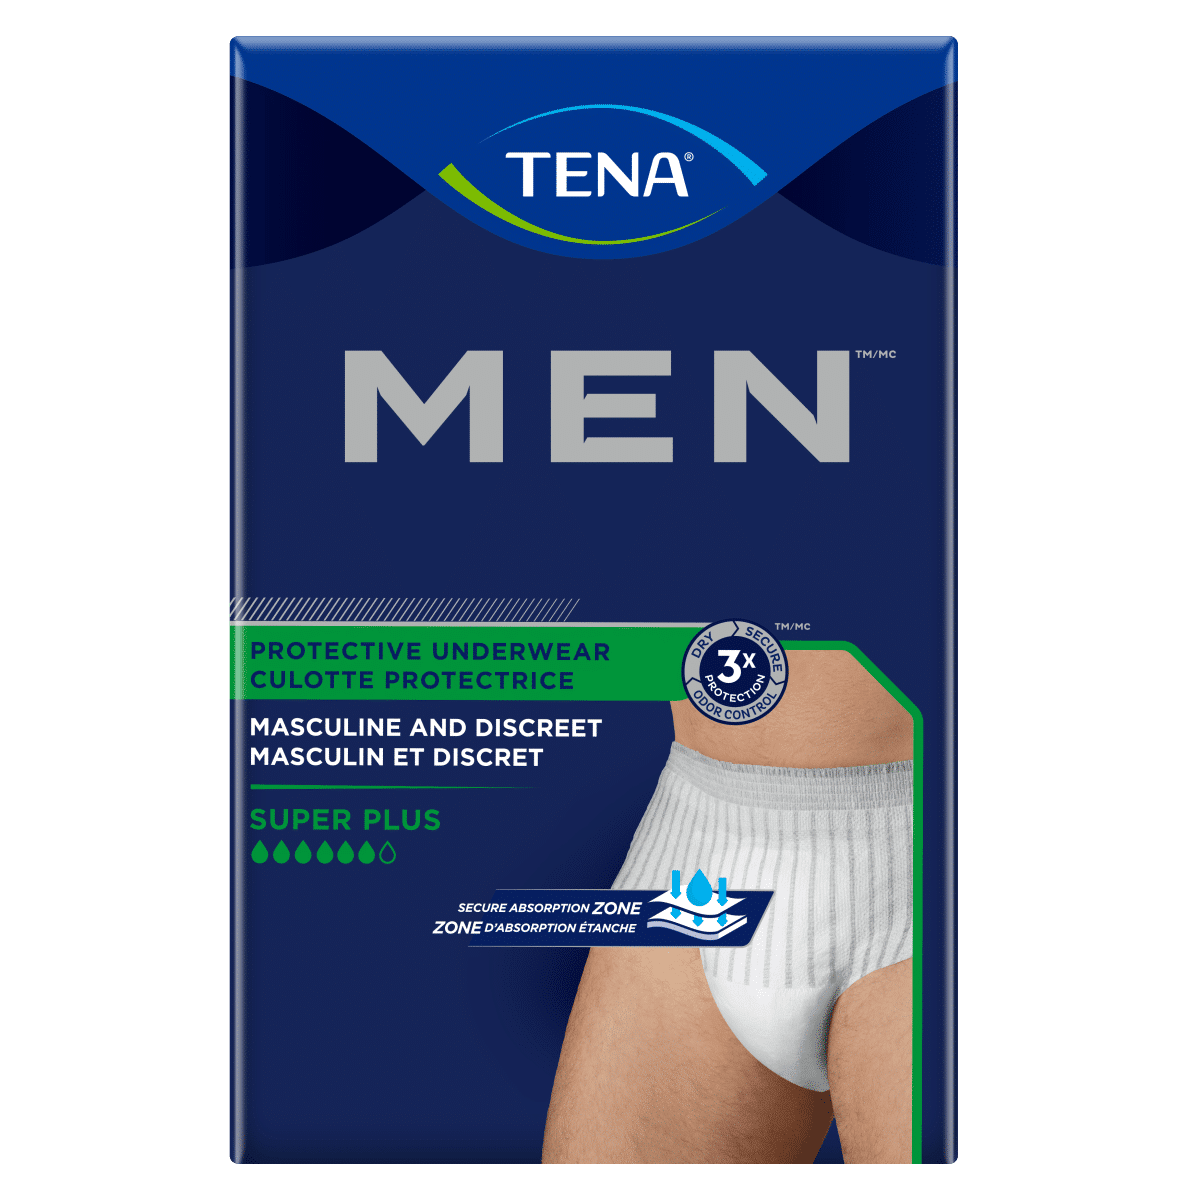 TENA Men's Super Plus Protective Underwear, L/XL